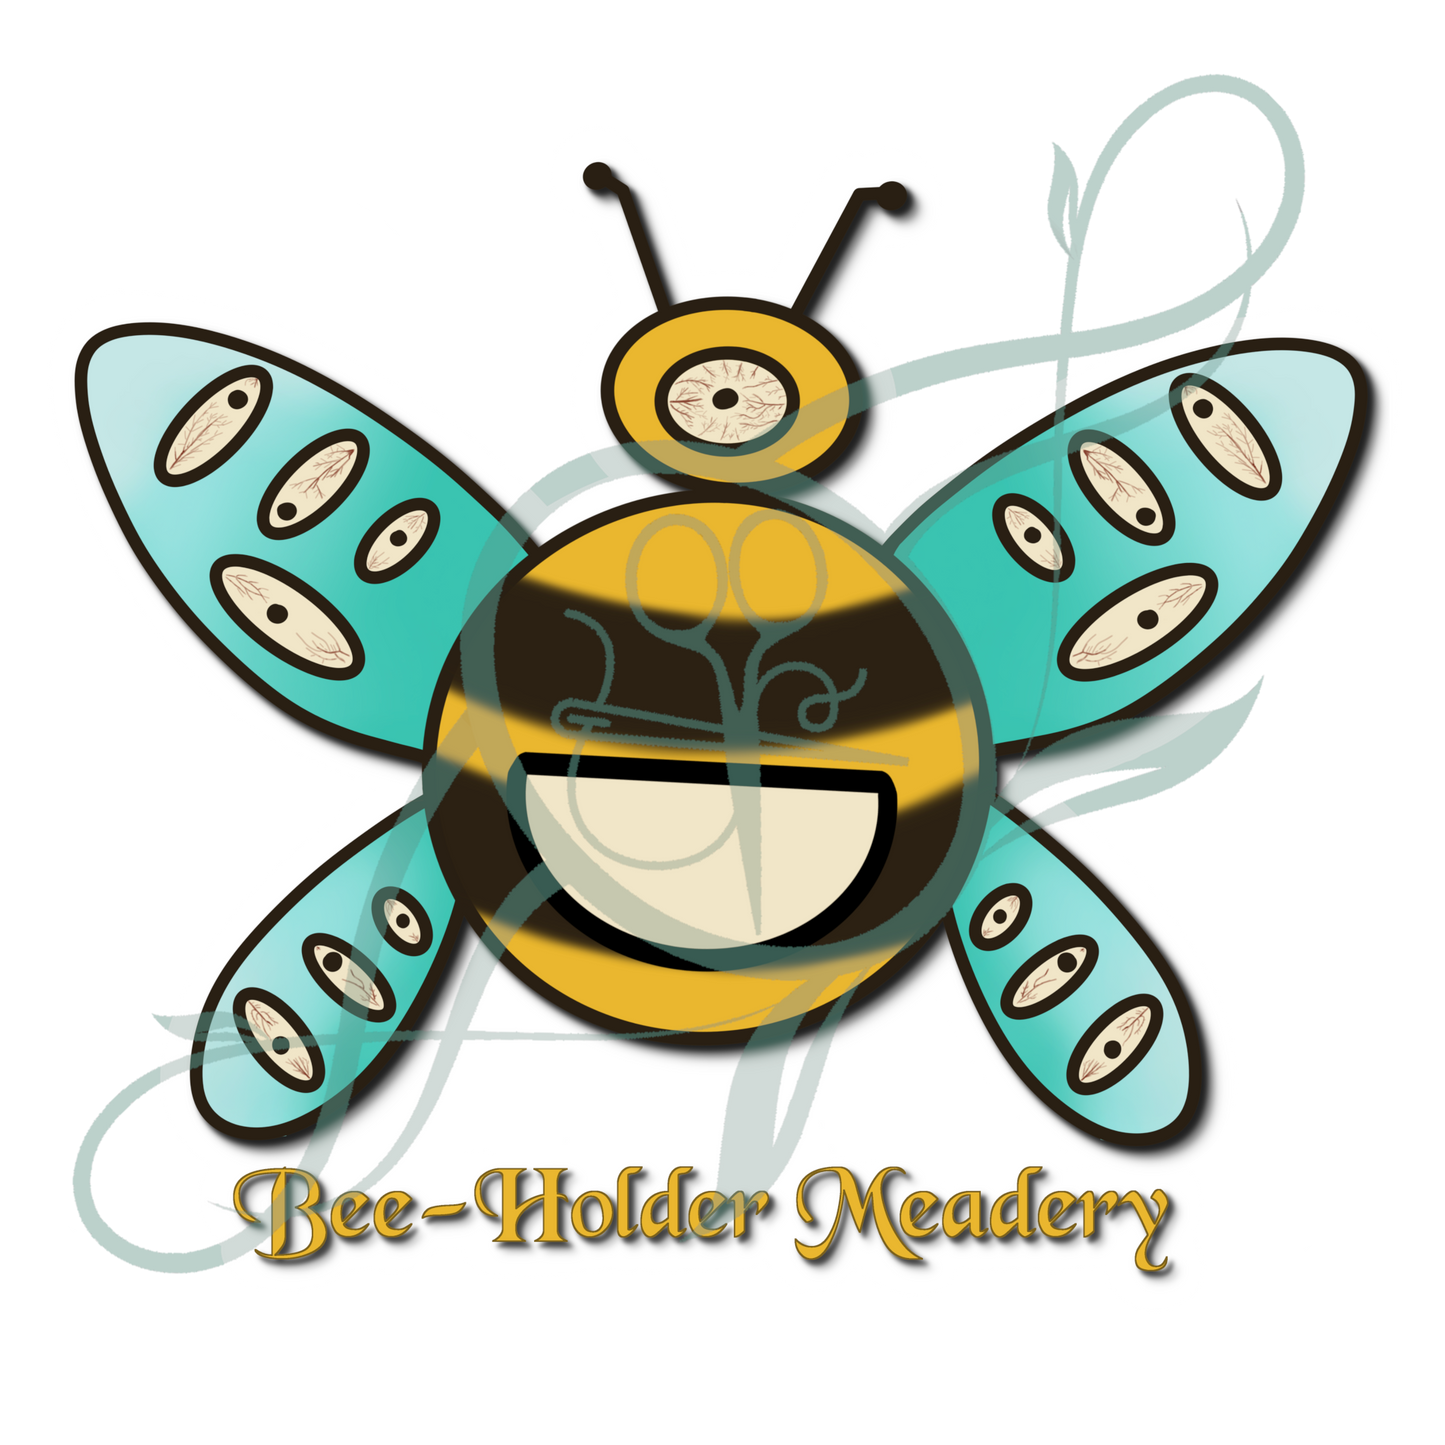 Bee-Holder Meadery Sticker